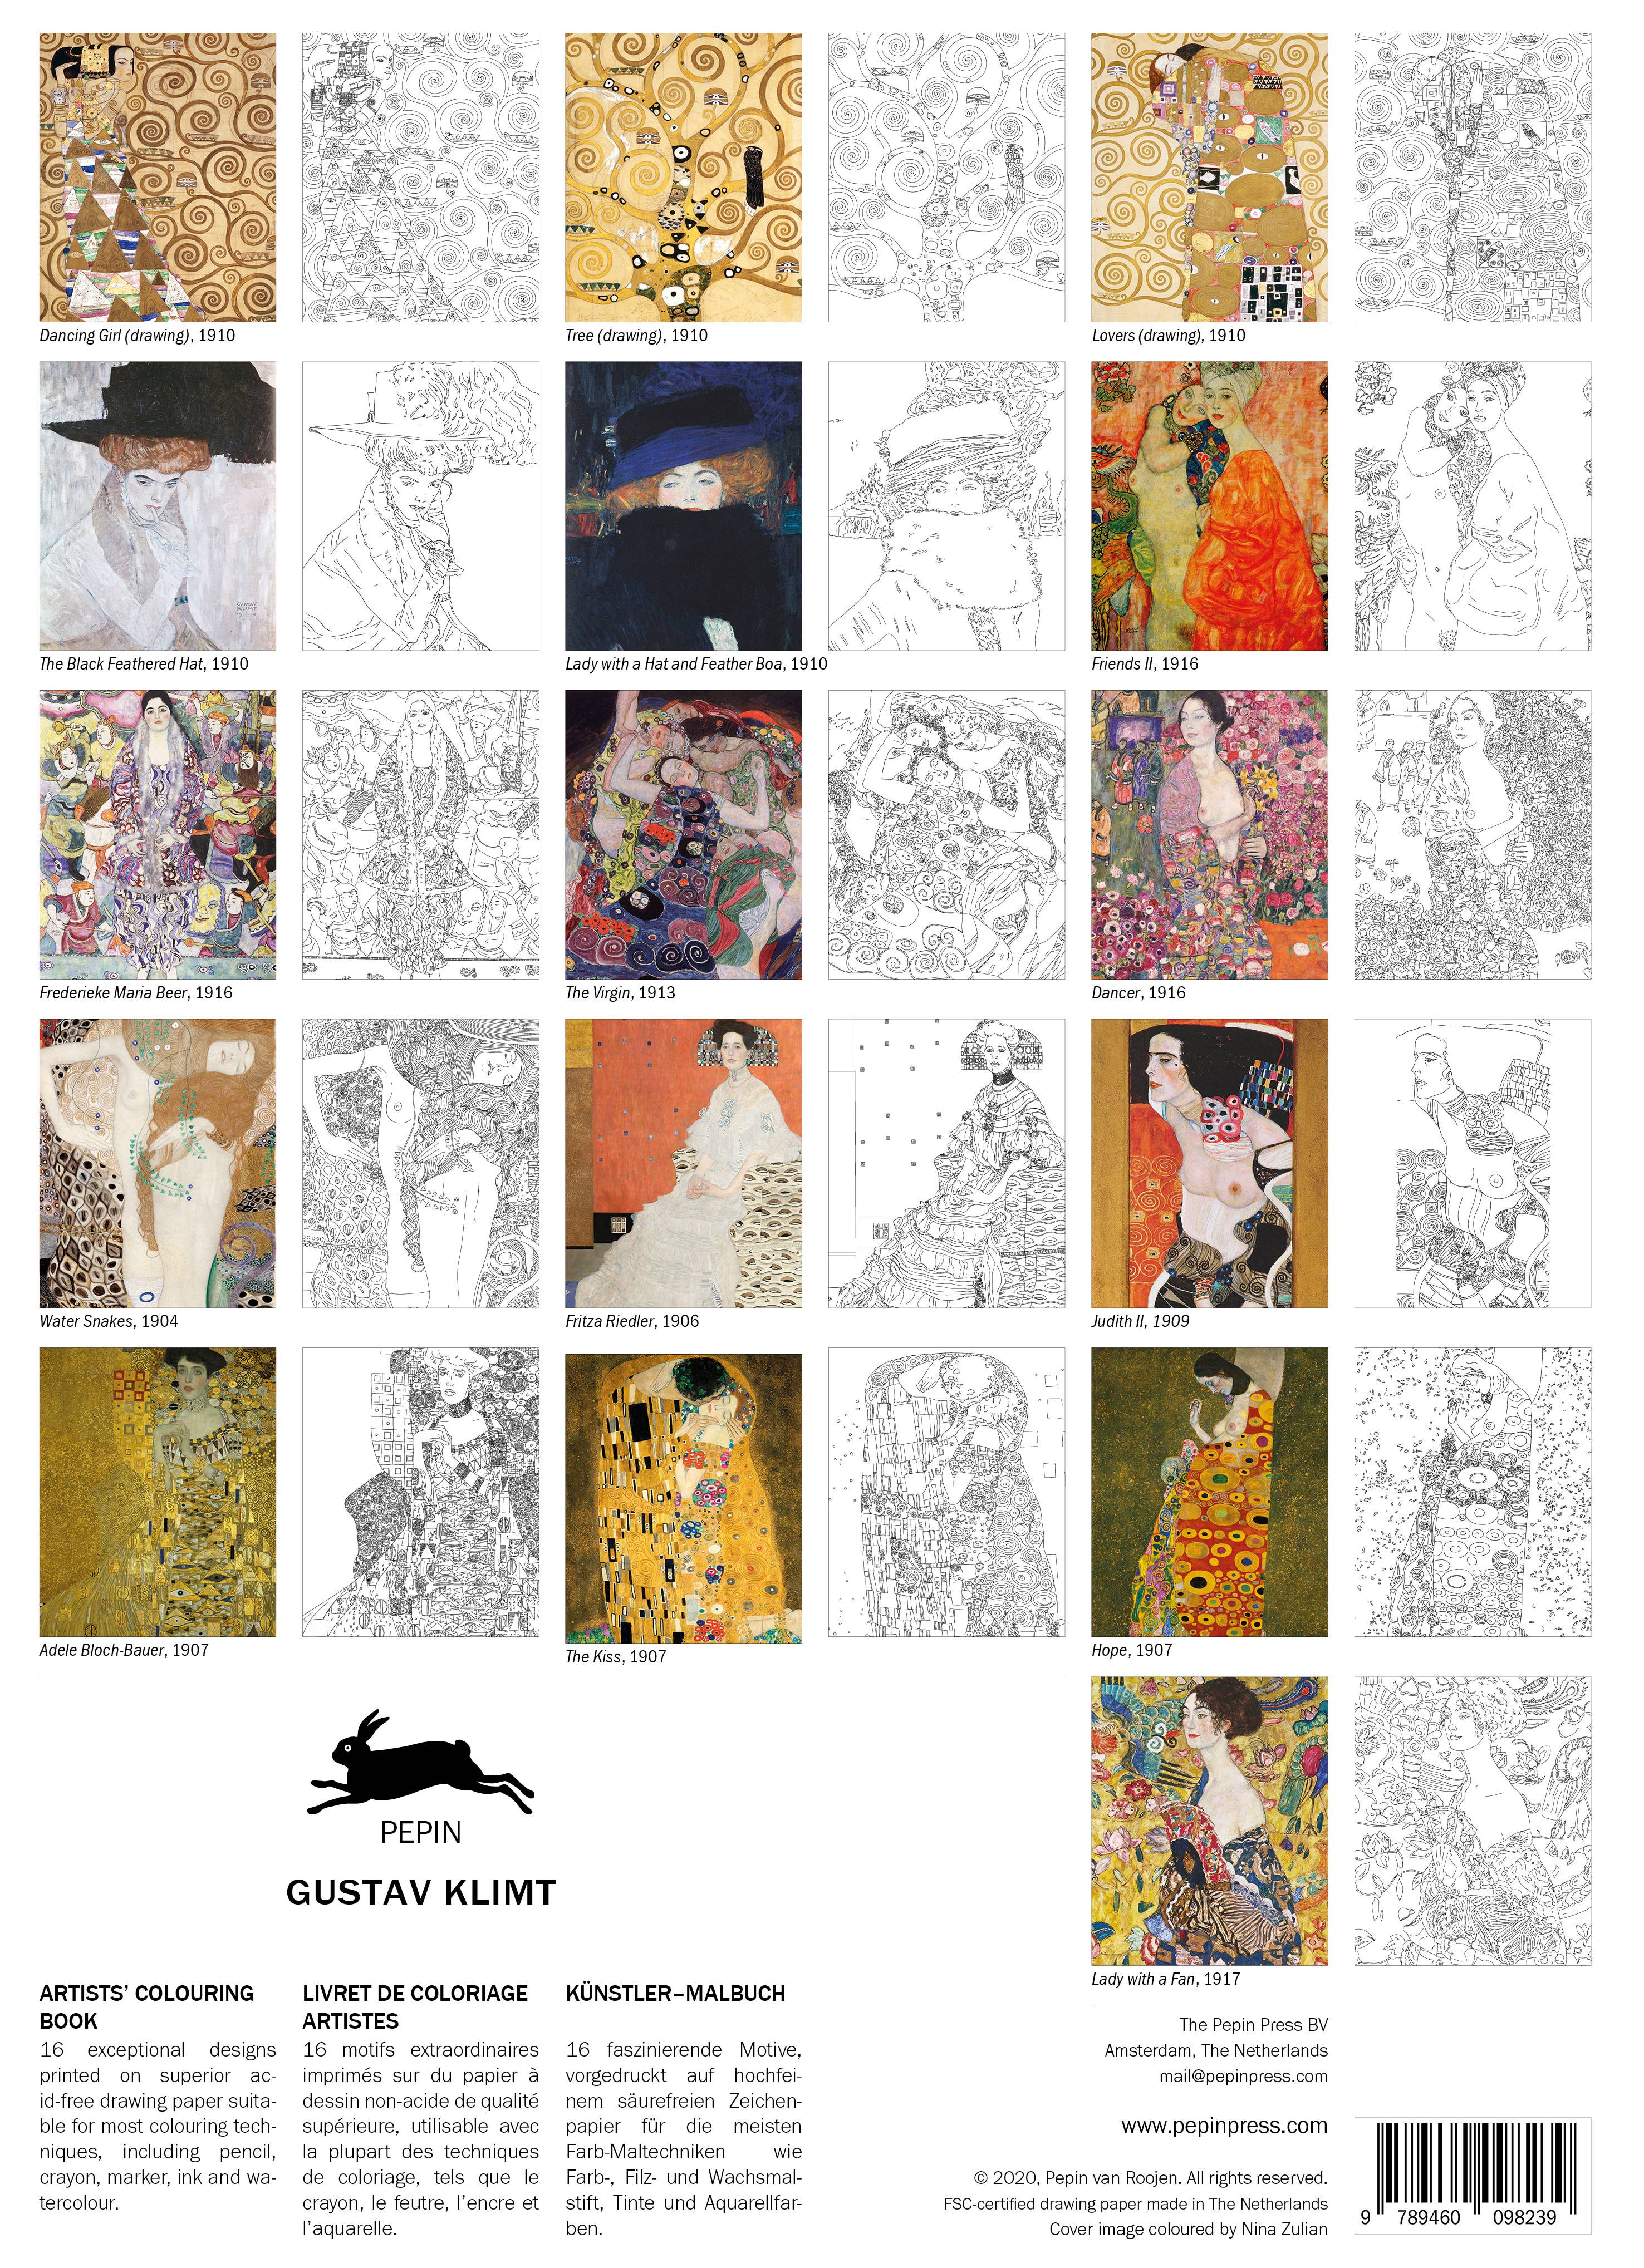 Artists' 16 Page Professional Colouring Book - Gustav Klimt